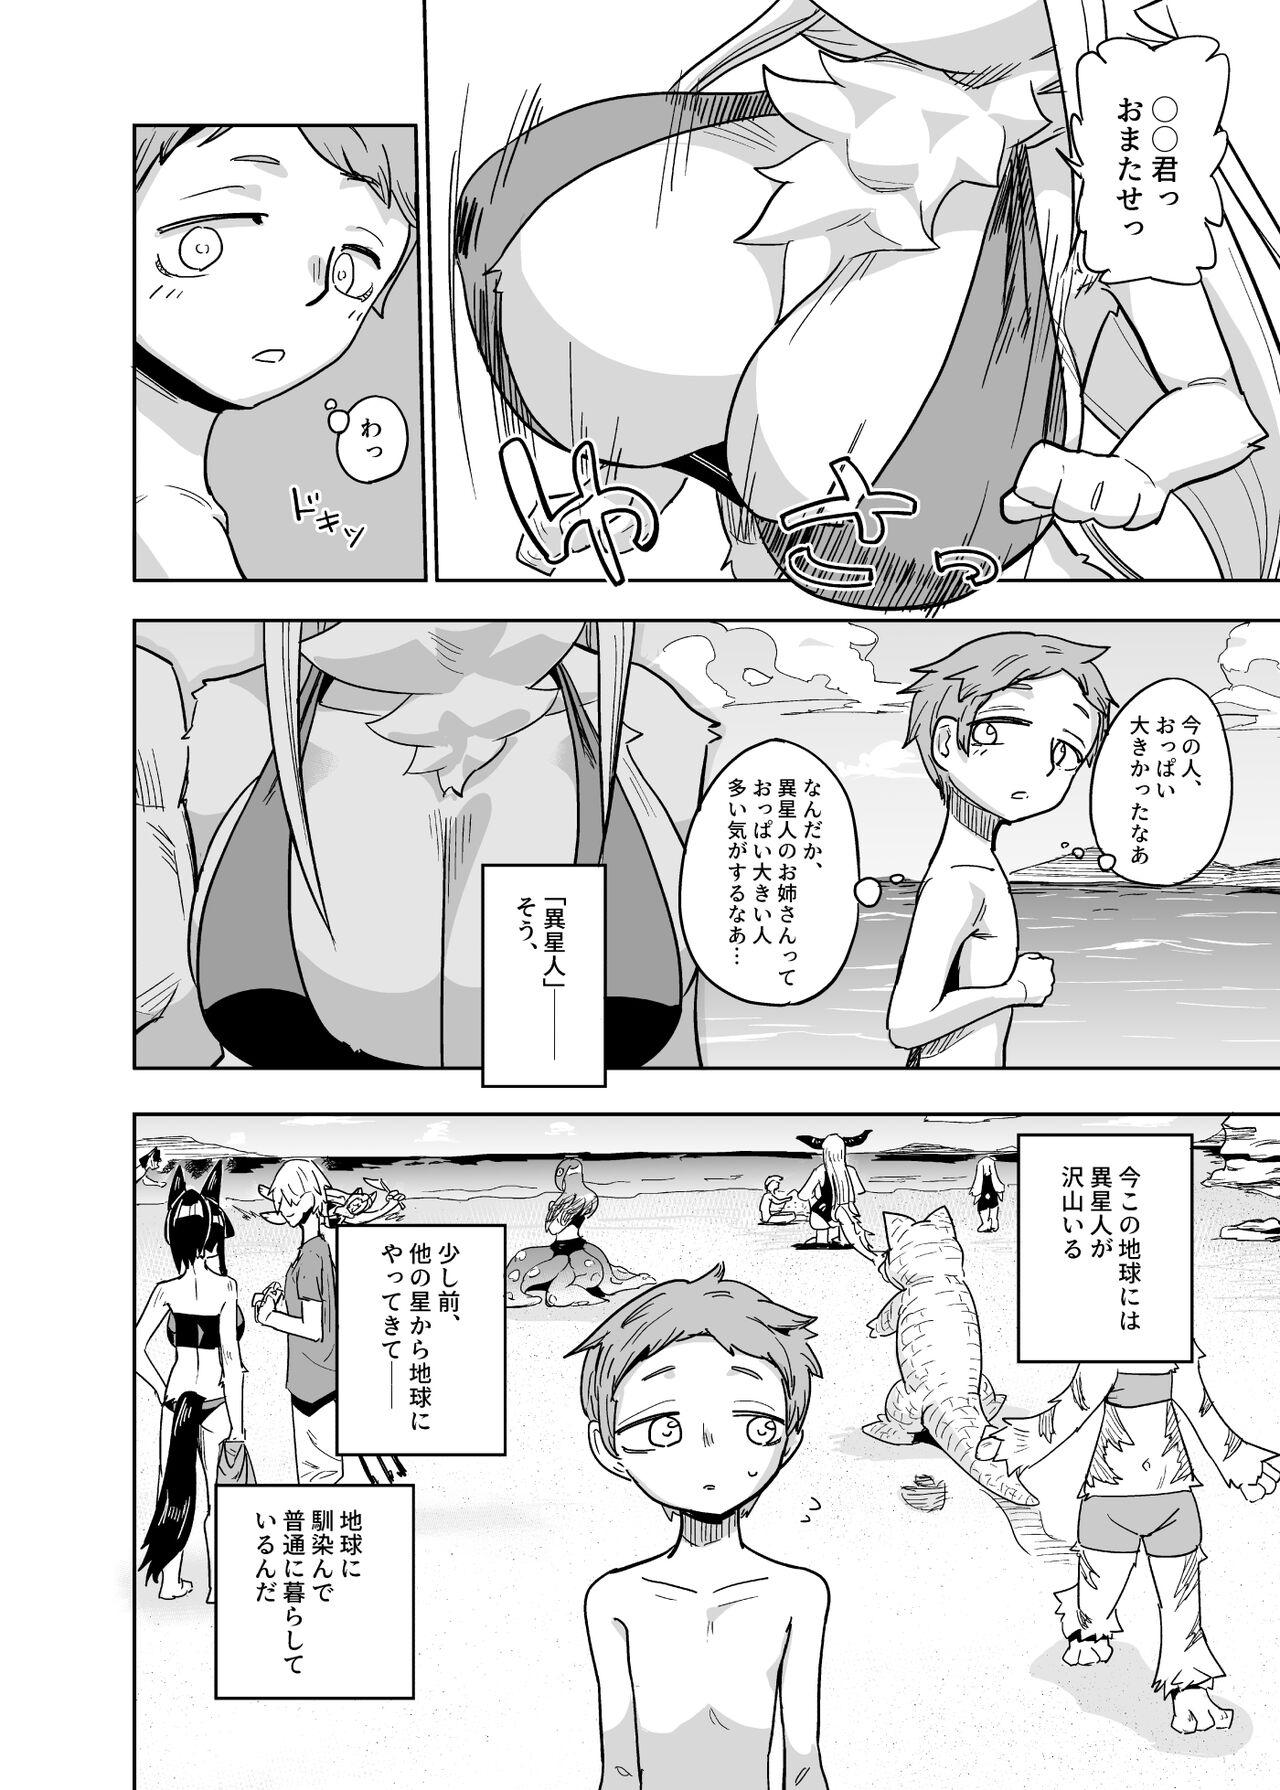 Prostituta Iseijin no Hanshoku Nikki 7 - Original Jerking Off - Page 2